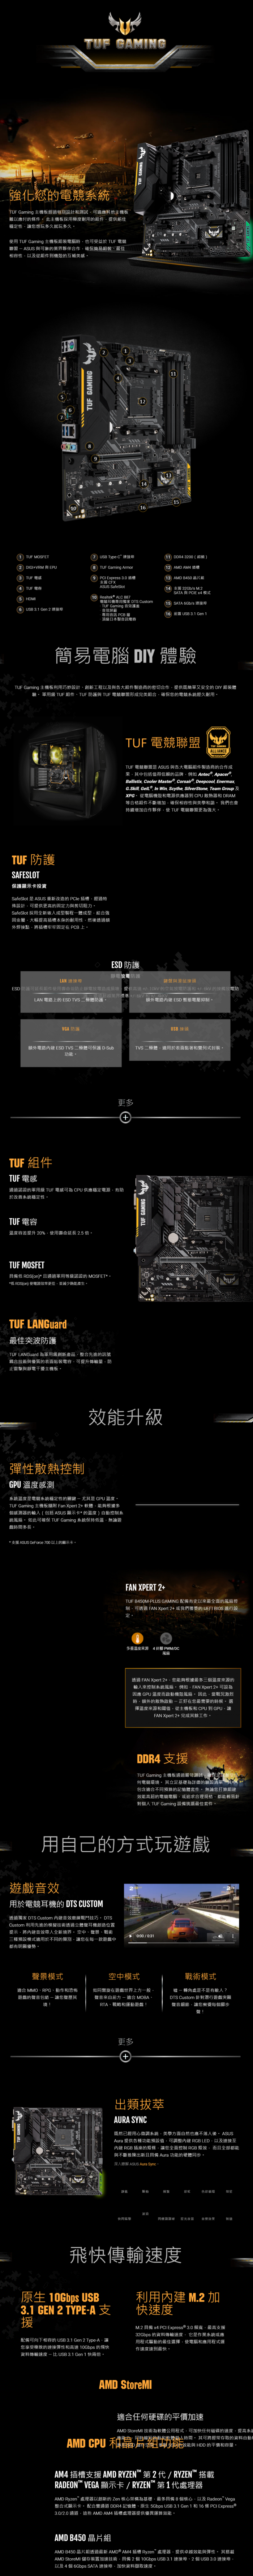 華碩 TUF B450M-PLUS GAMING